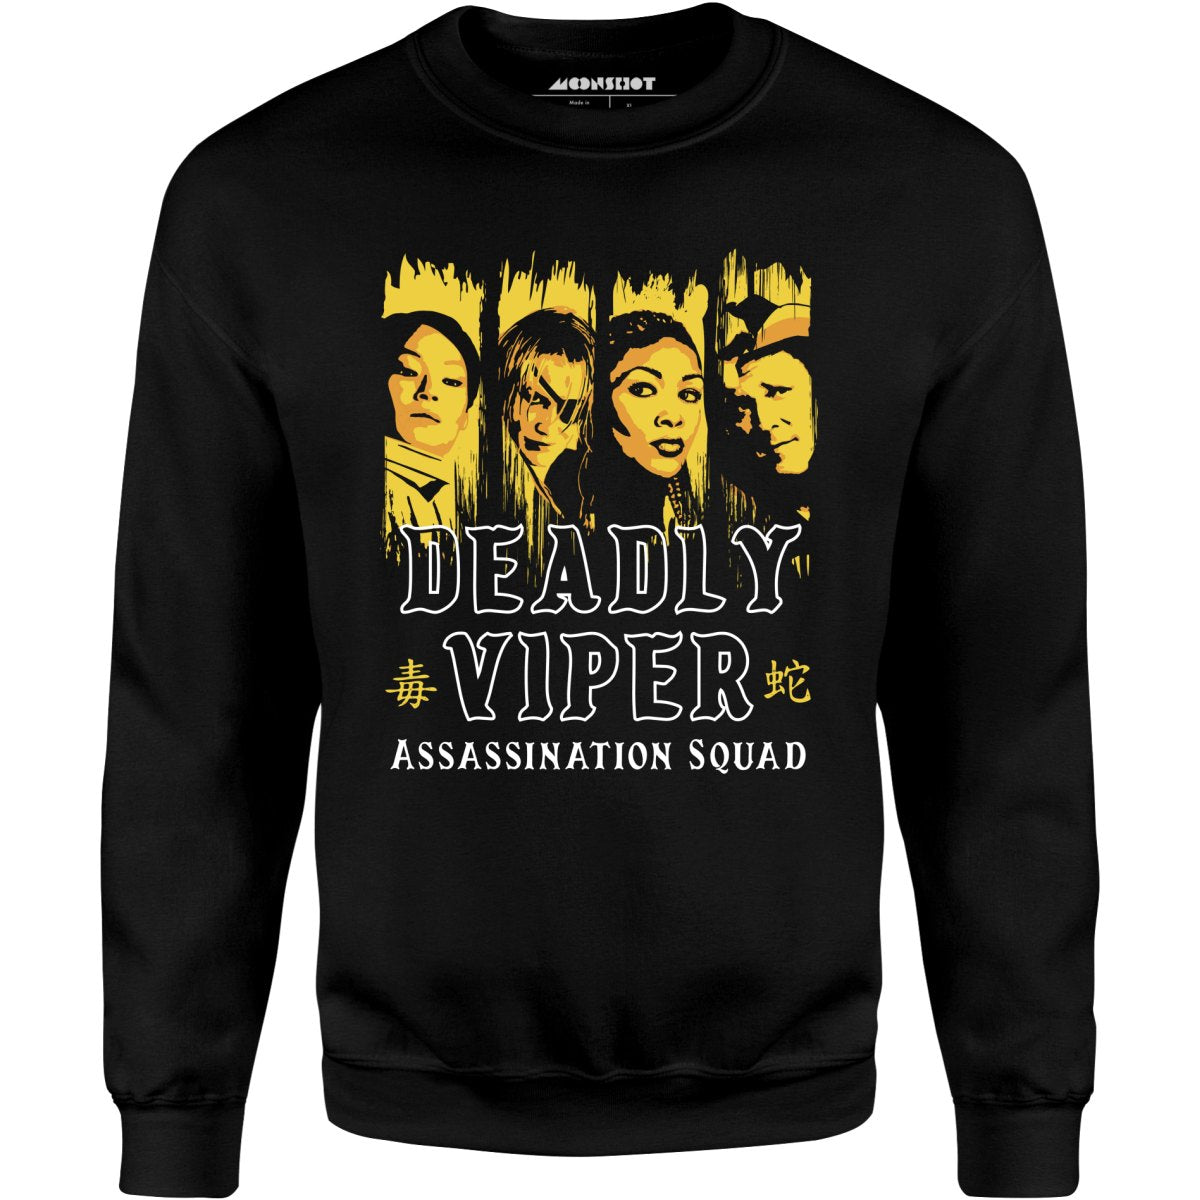 Deadly Viper Assassination Squad - Unisex Sweatshirt